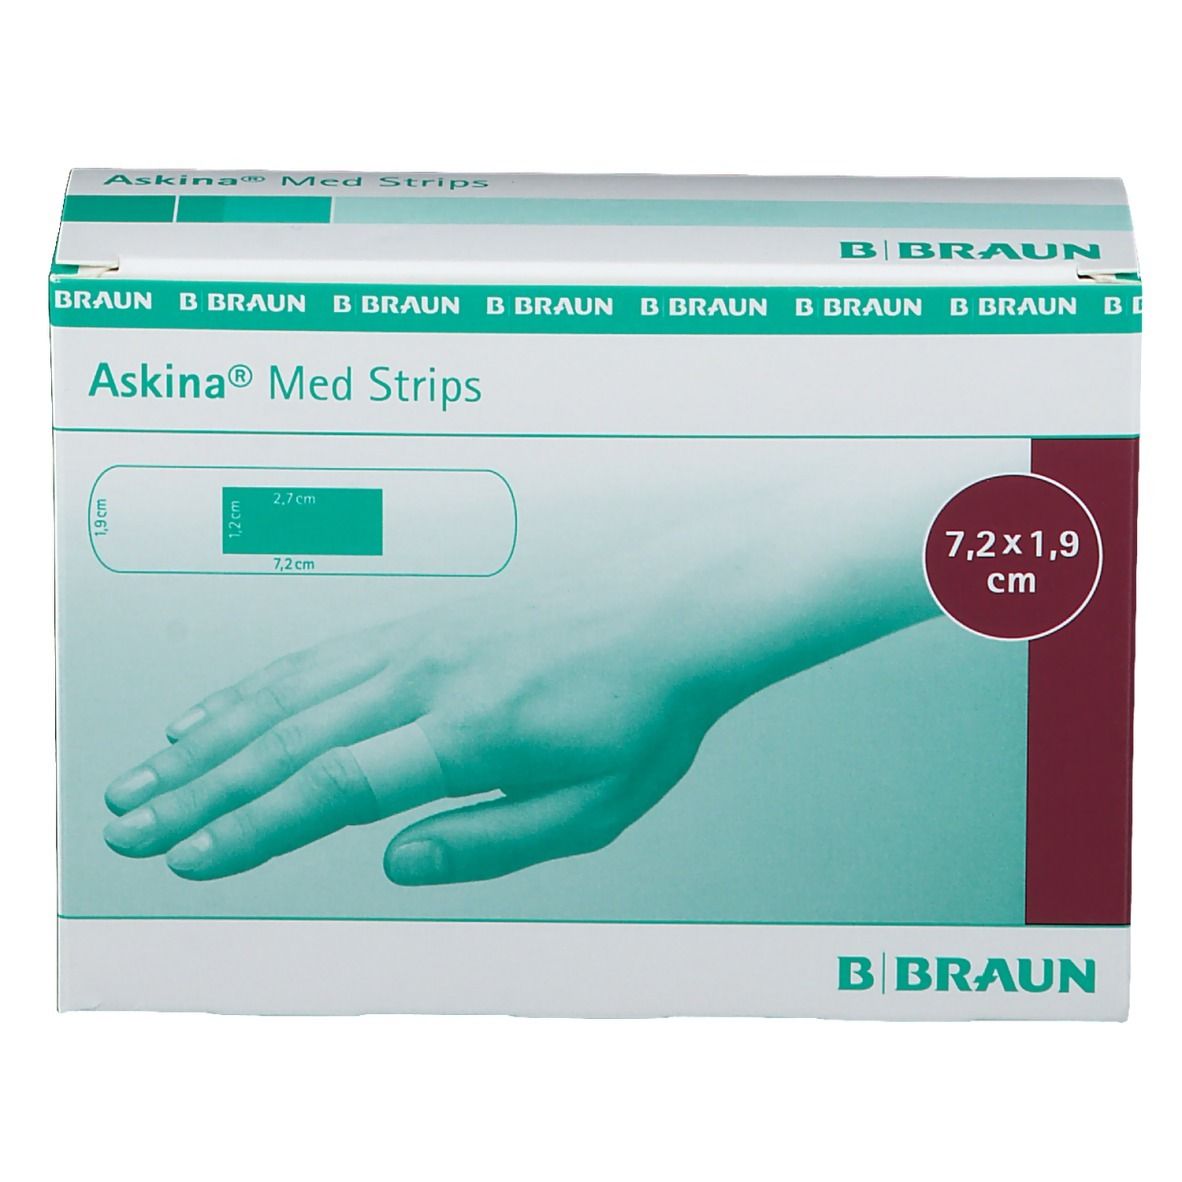 Askina® Med Strips 1,9 x 7,2 cm